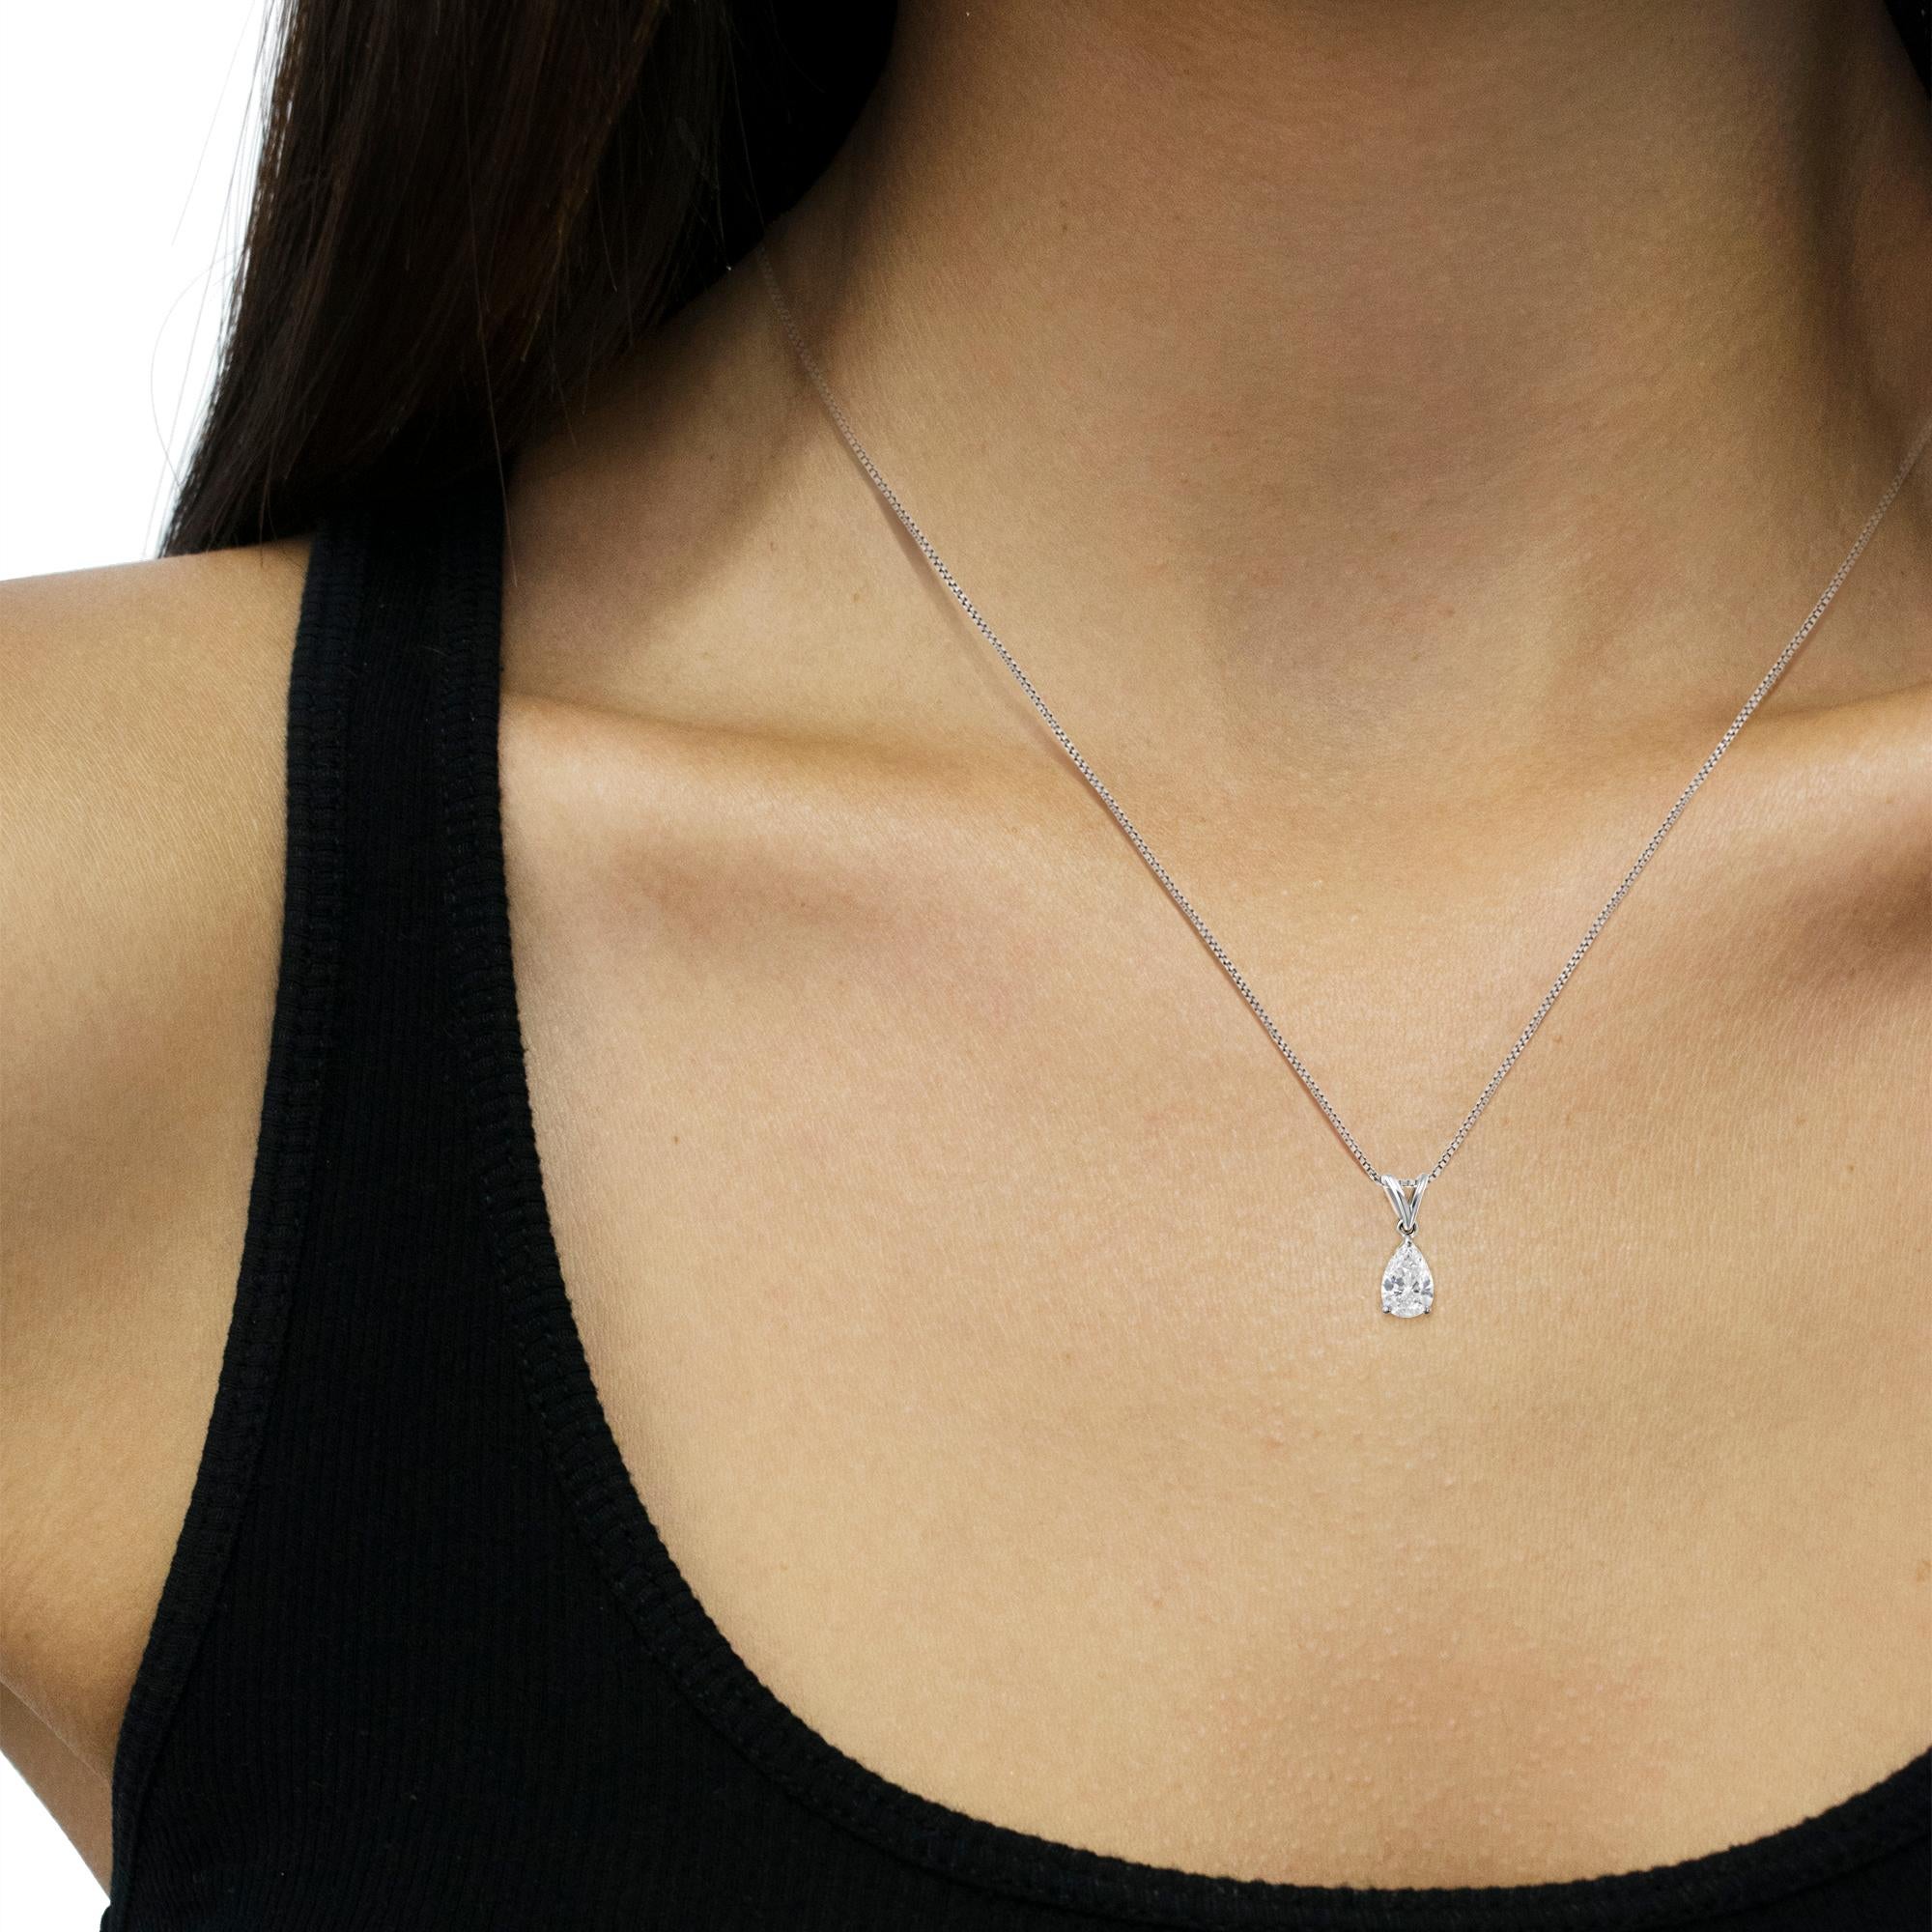 1 carat diamond necklace on neck